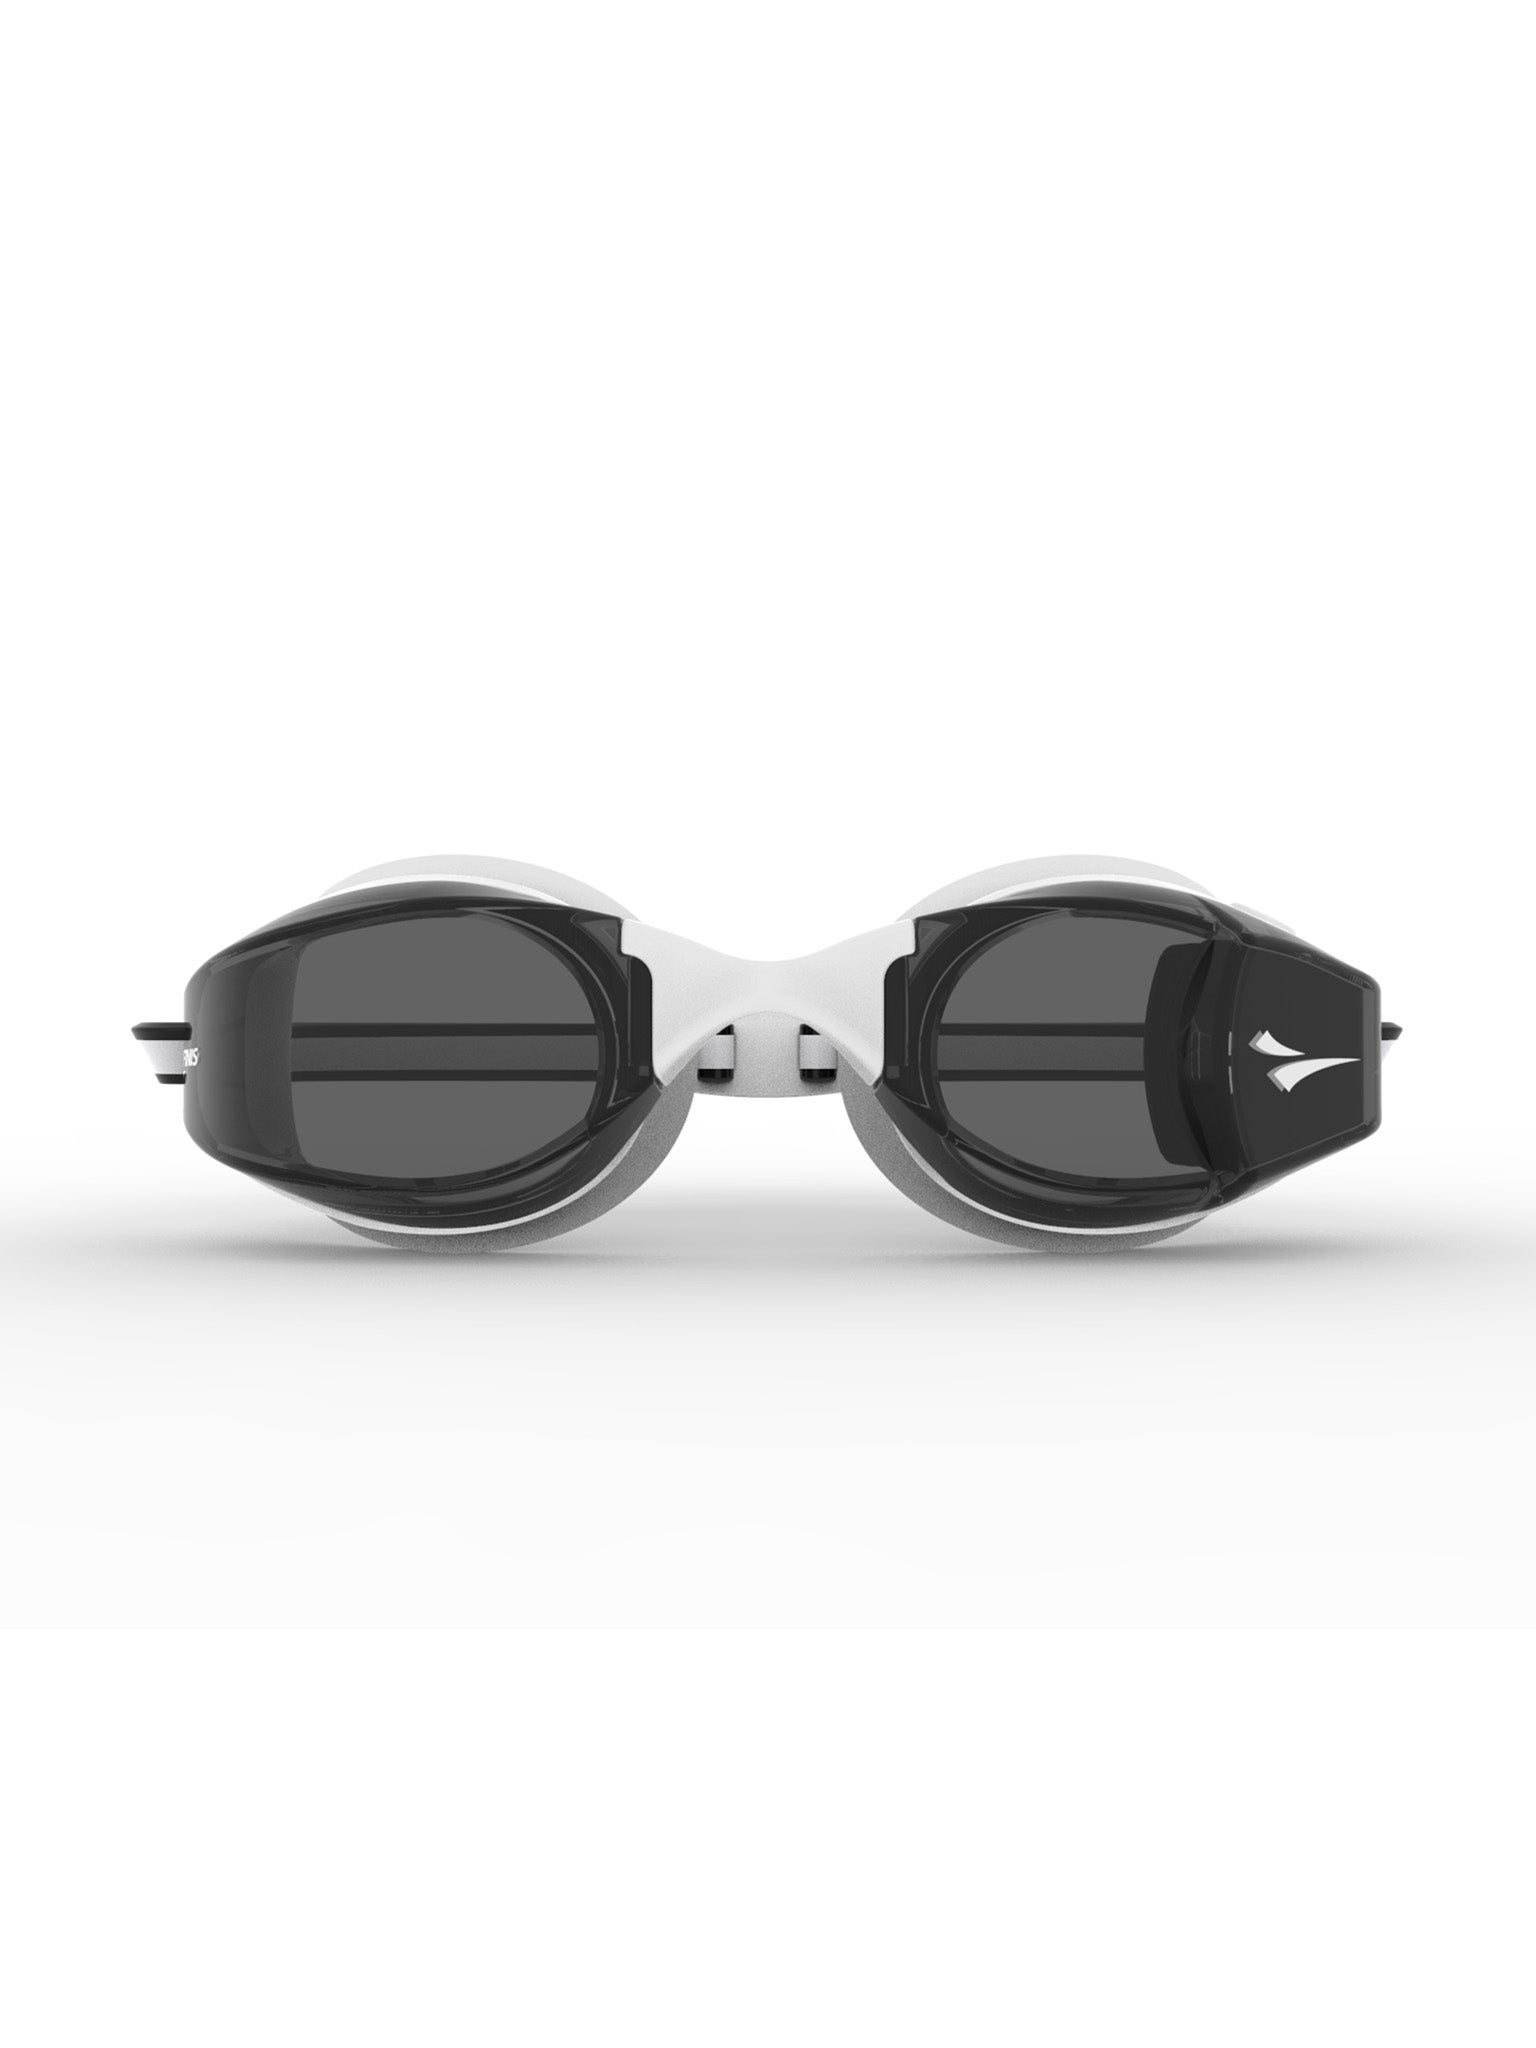 Finis Goggle Smart Starter Kit